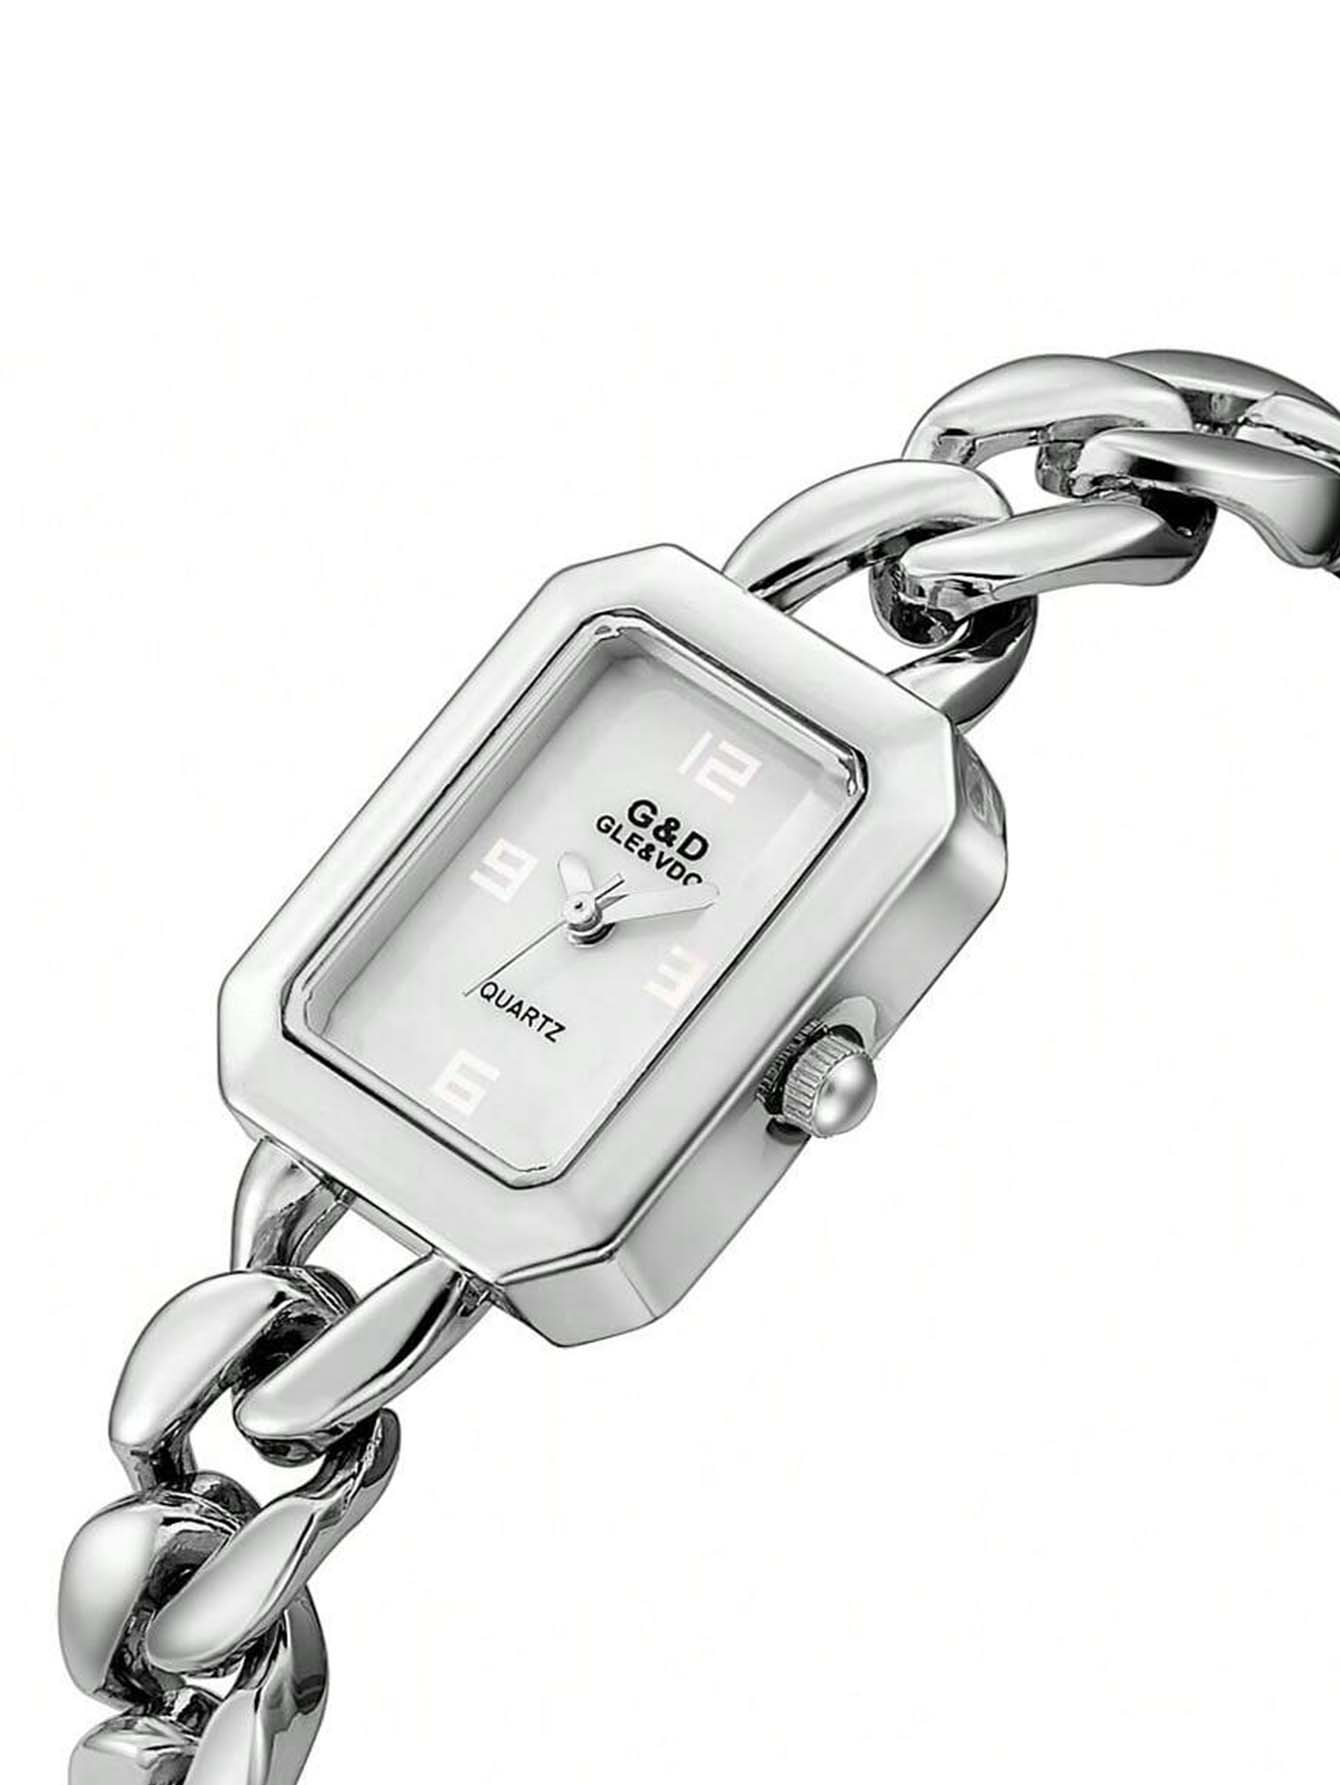 G&d Quartz Wristwatch - Silver